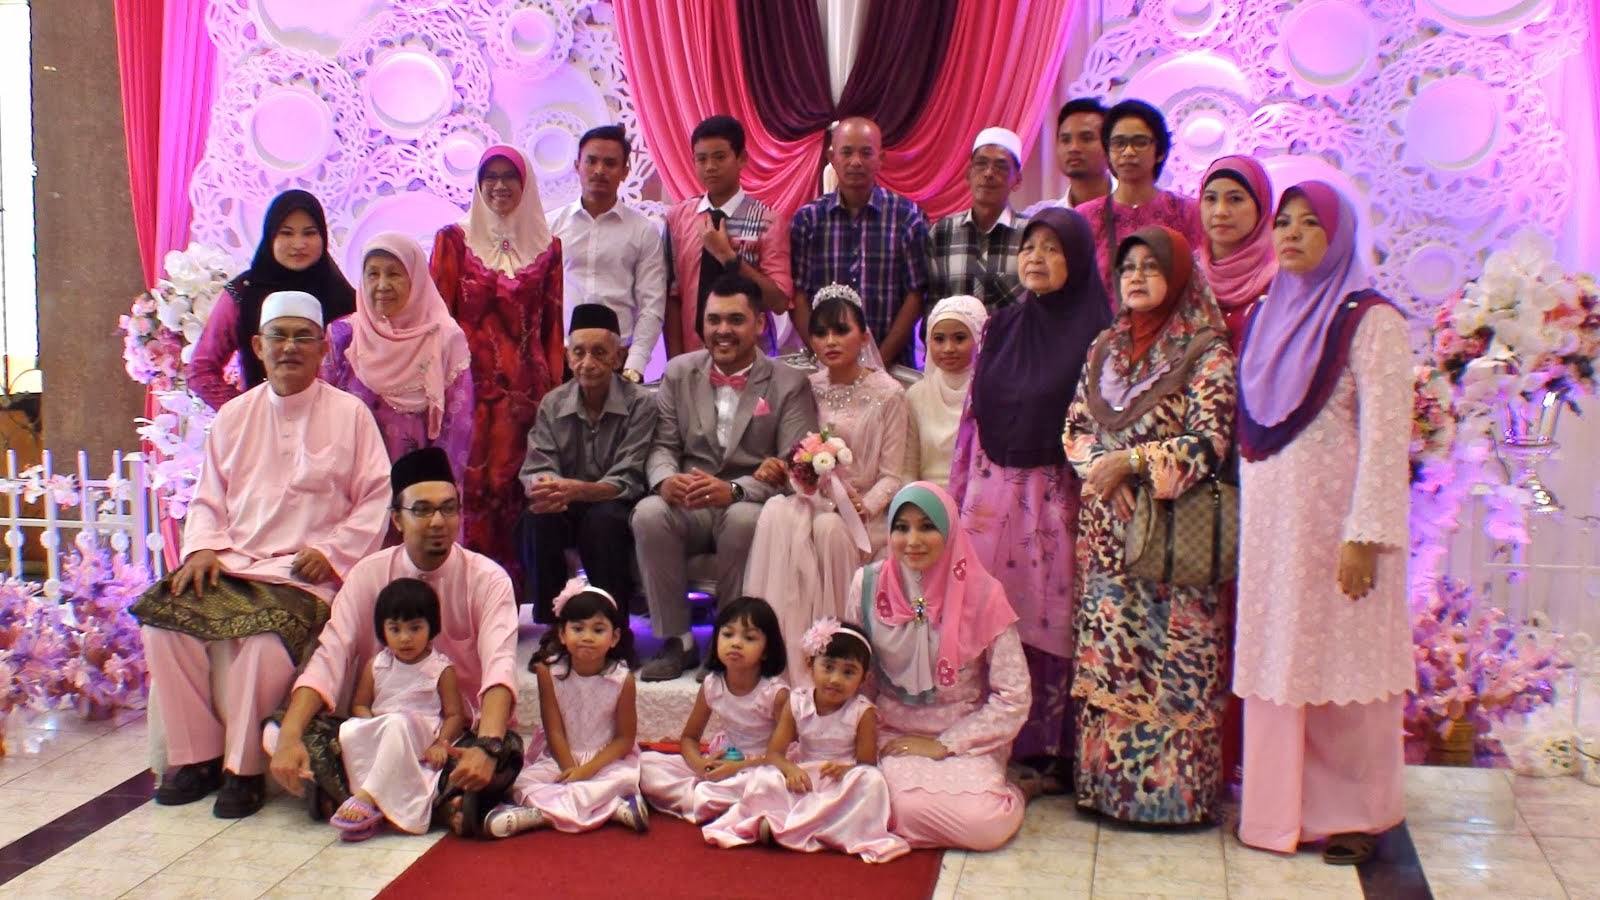 Mariage malaisien